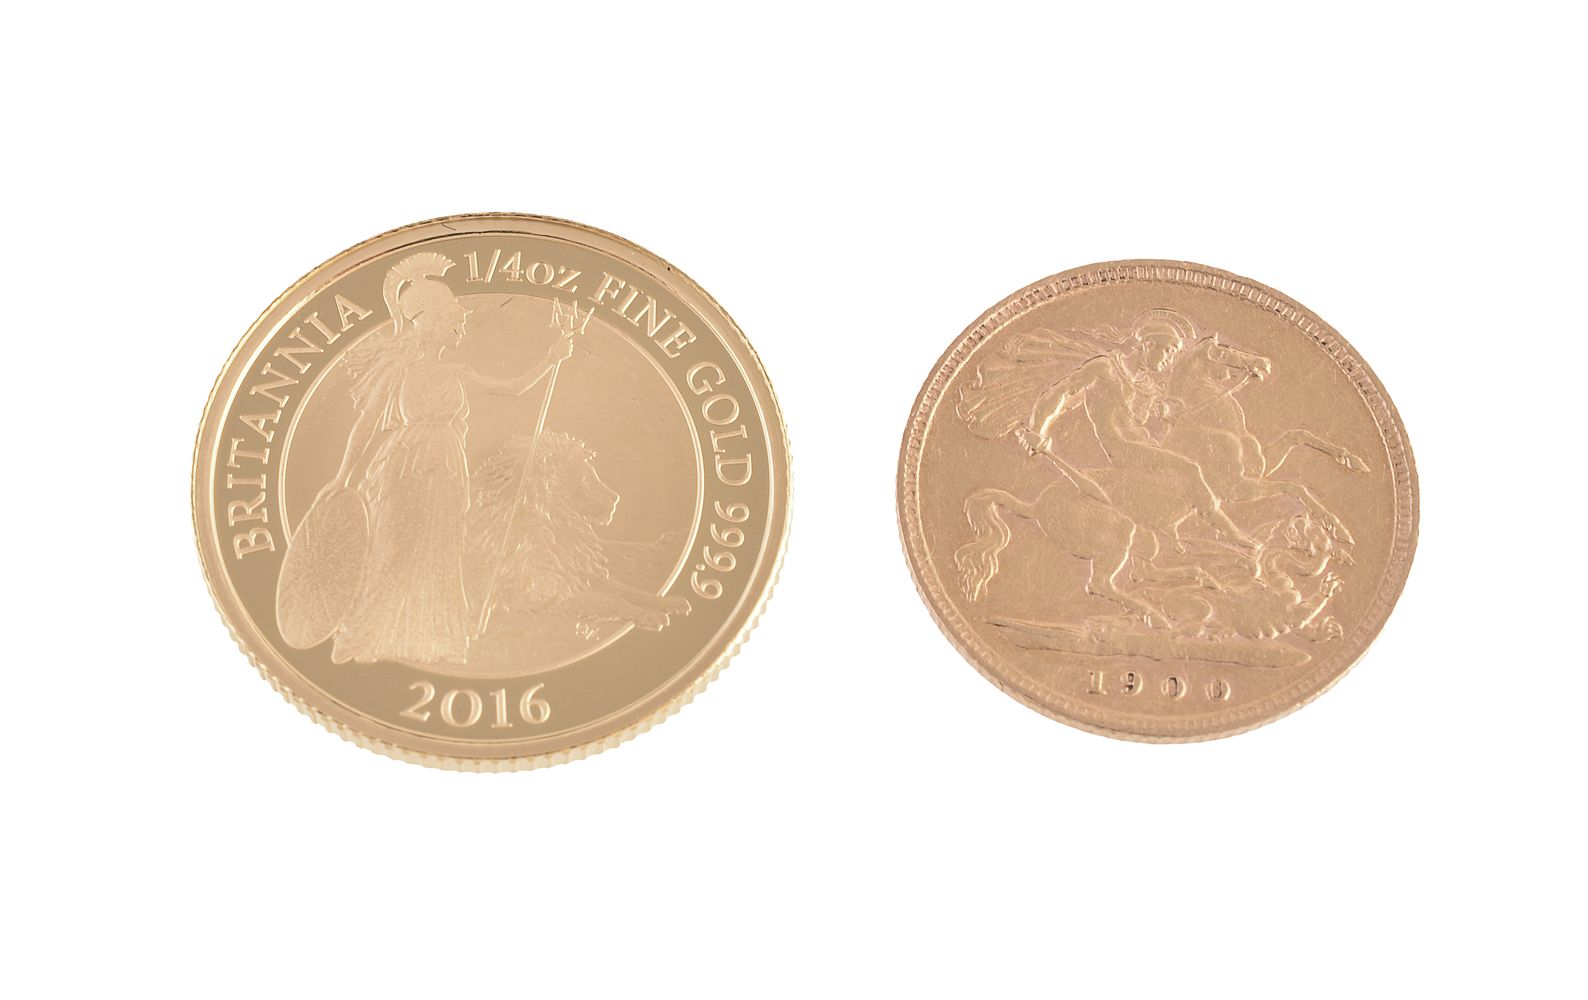 Elizabeth II, proof gold Britannia 25-Pounds 2016 - Image 2 of 3